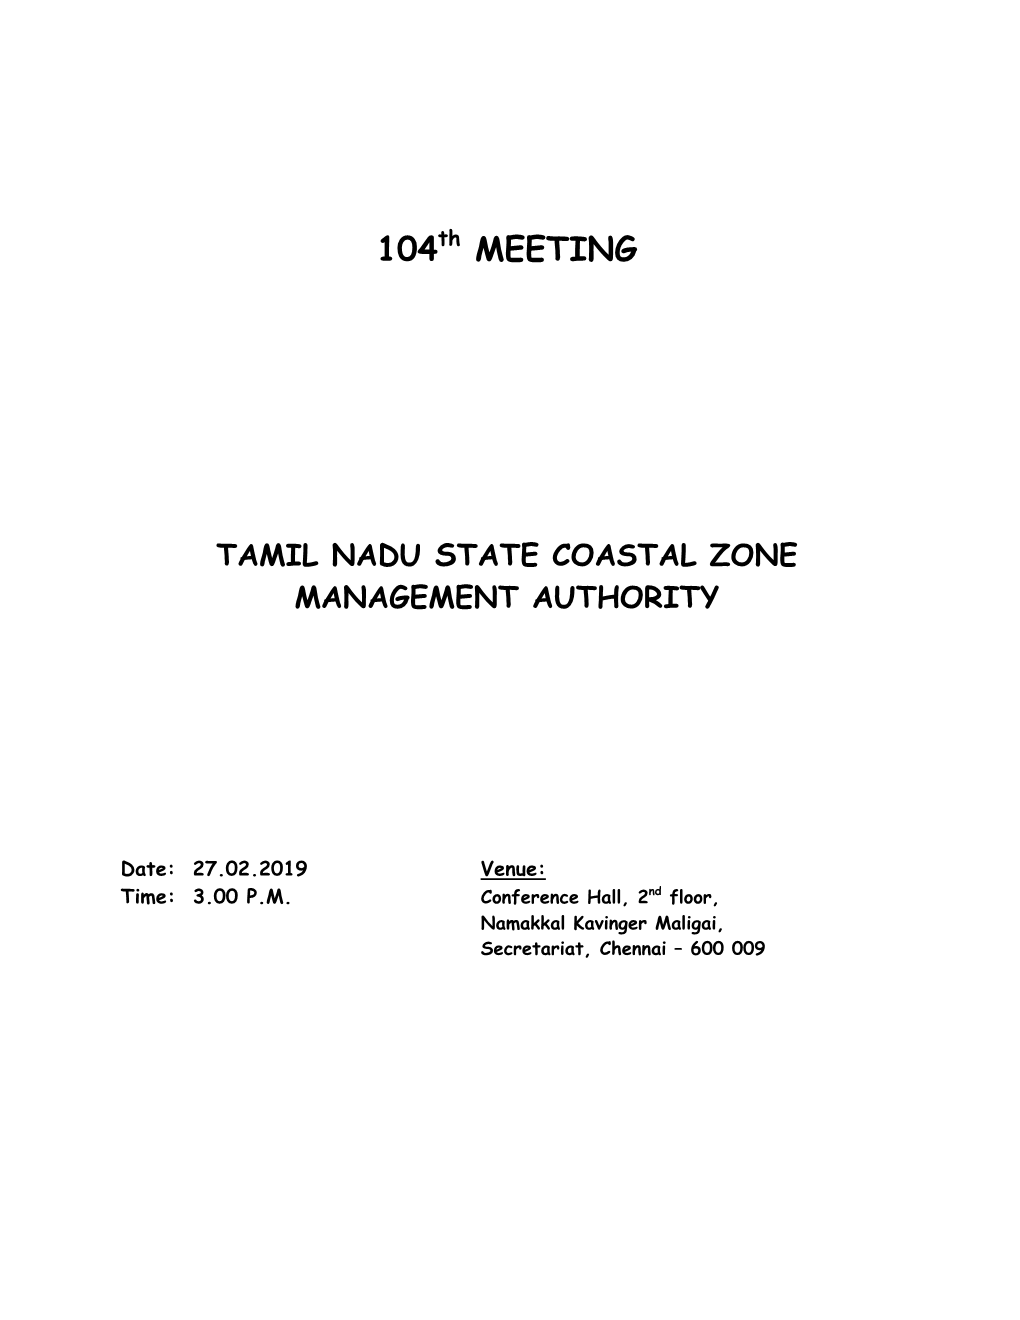 104Th MEETING TAMIL NADU STATE